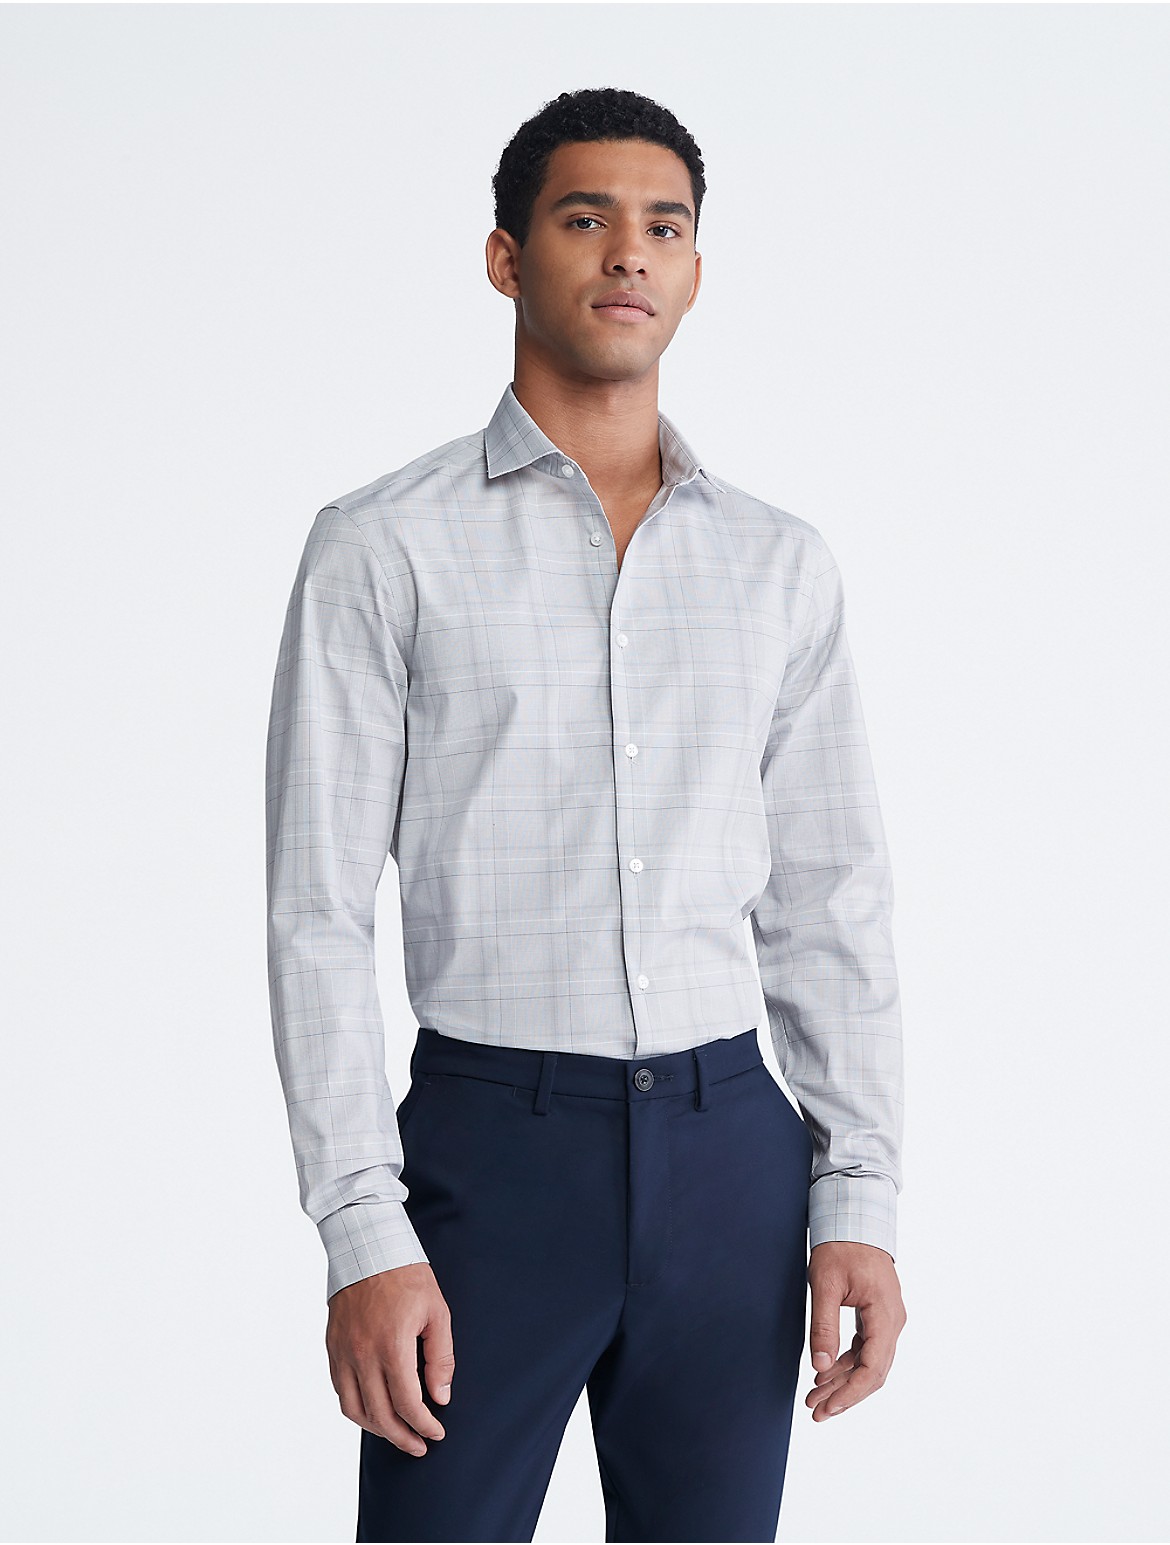 Calvin Klein Men's Steel Slim Fit Grey Plaid Dress Shirt - Grey - 14.5/32-33